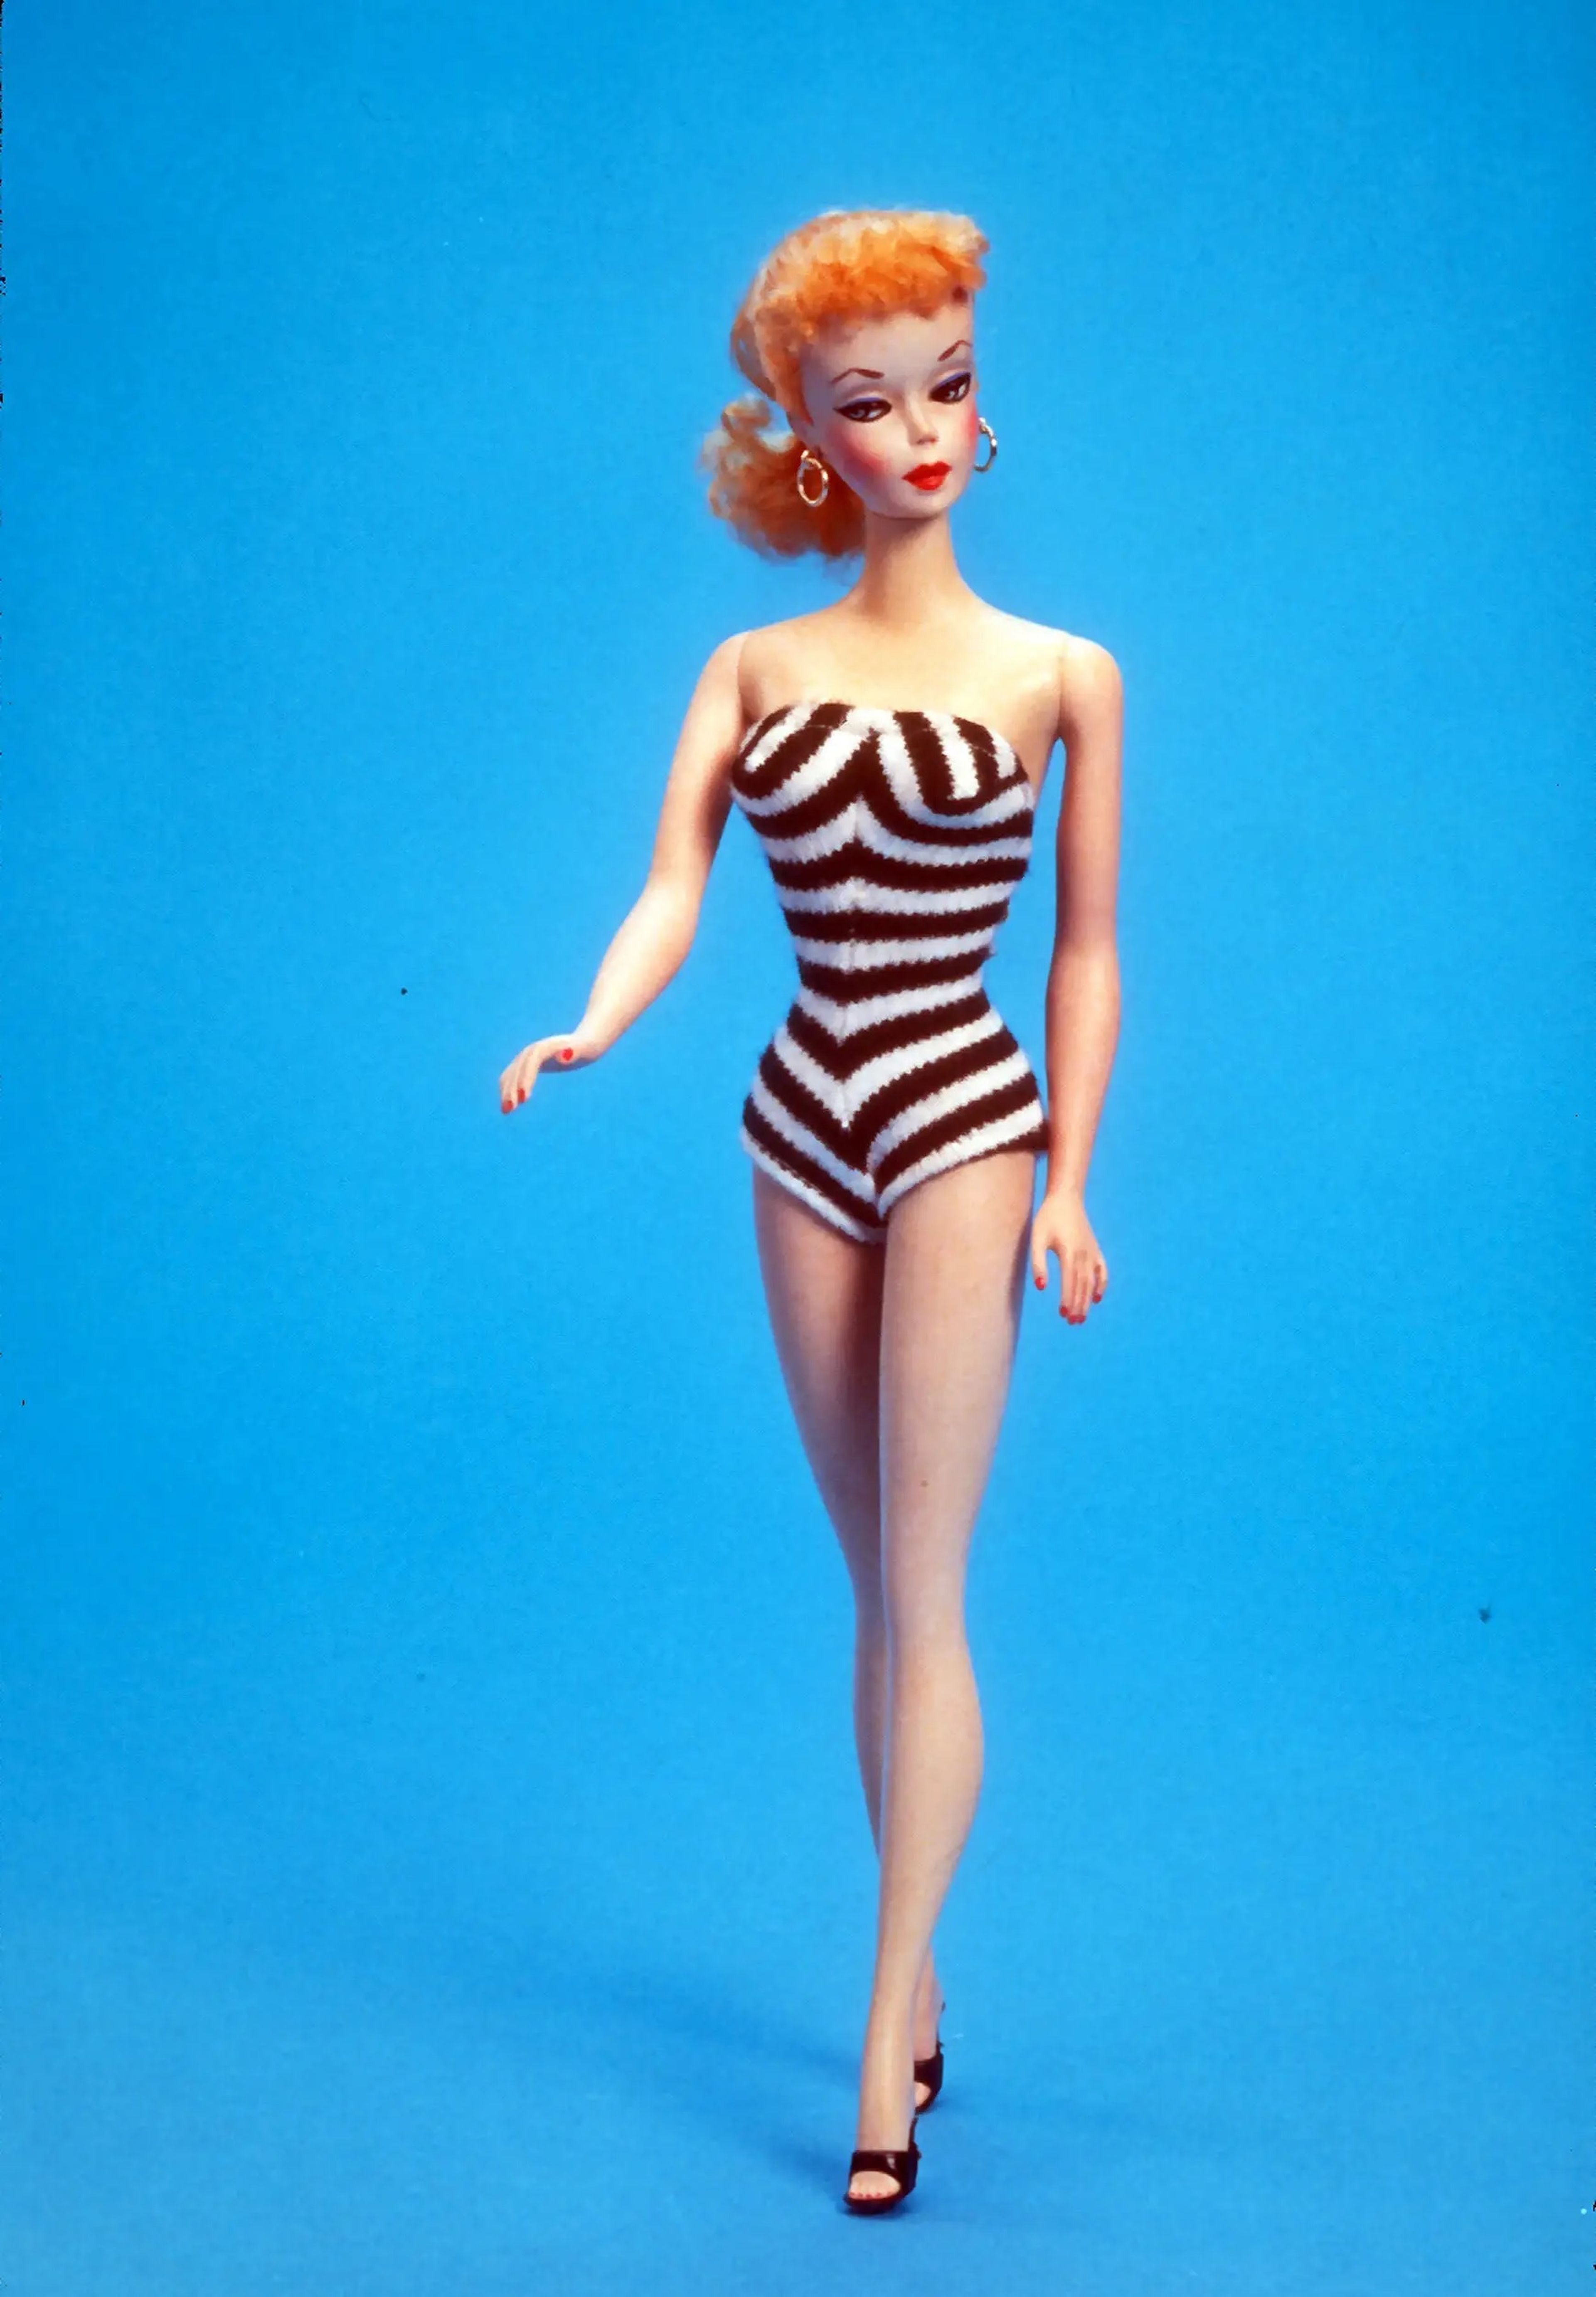 La Barbie original se lanzó en 1959.